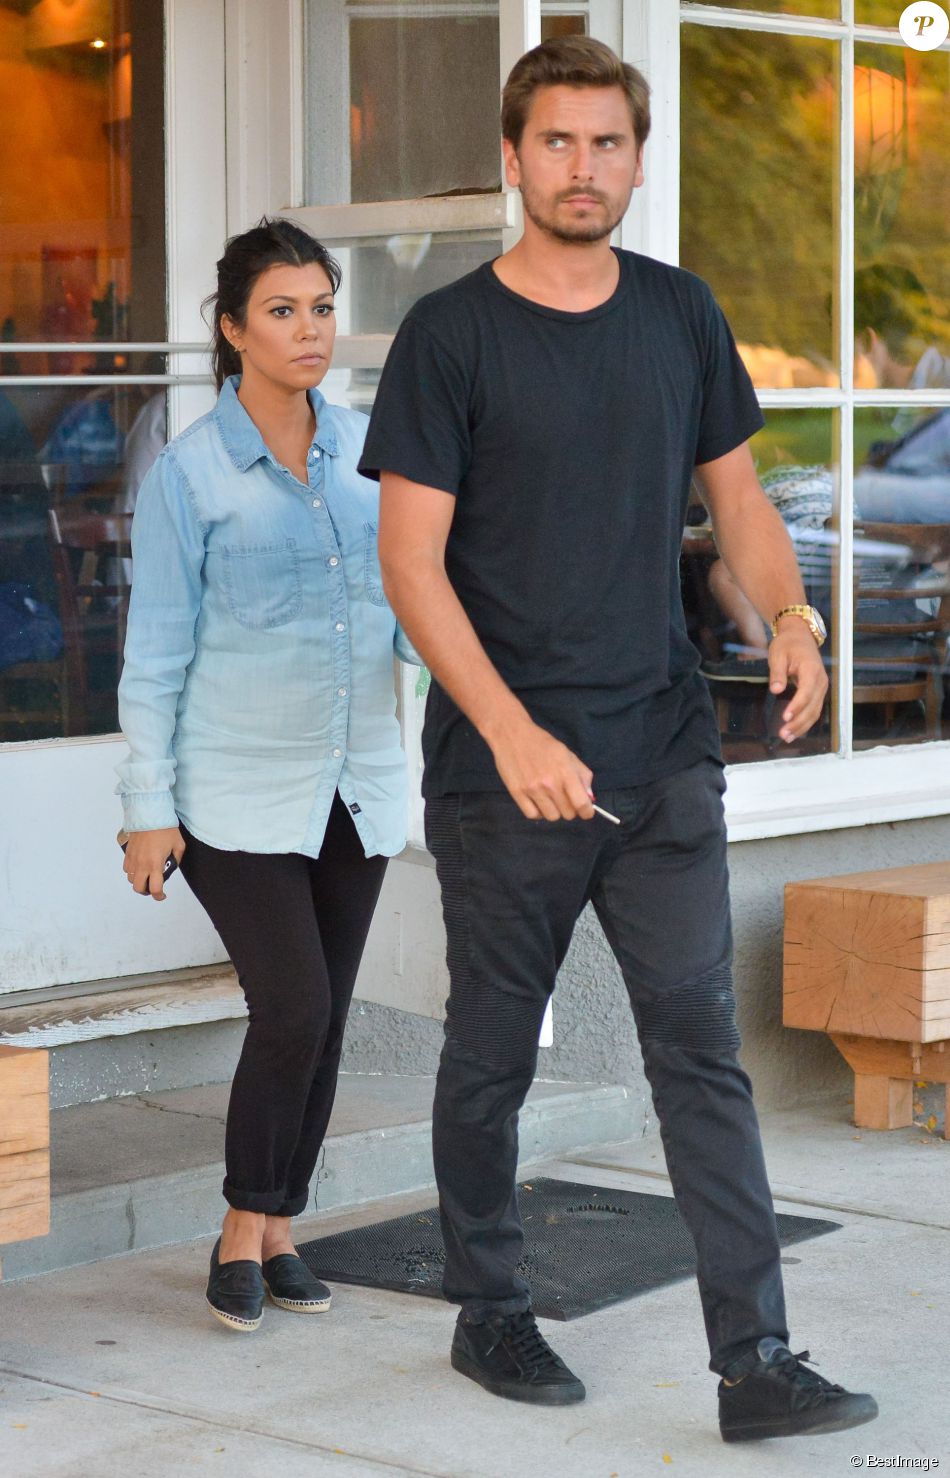  Kourtney Kardashian enceinte et son compagnon Scott Disick vont d&amp;icirc;ner au restaurant Suzi Zuki &amp;agrave; Water Mill, le 10 ao&amp;ucirc;t 2014.  